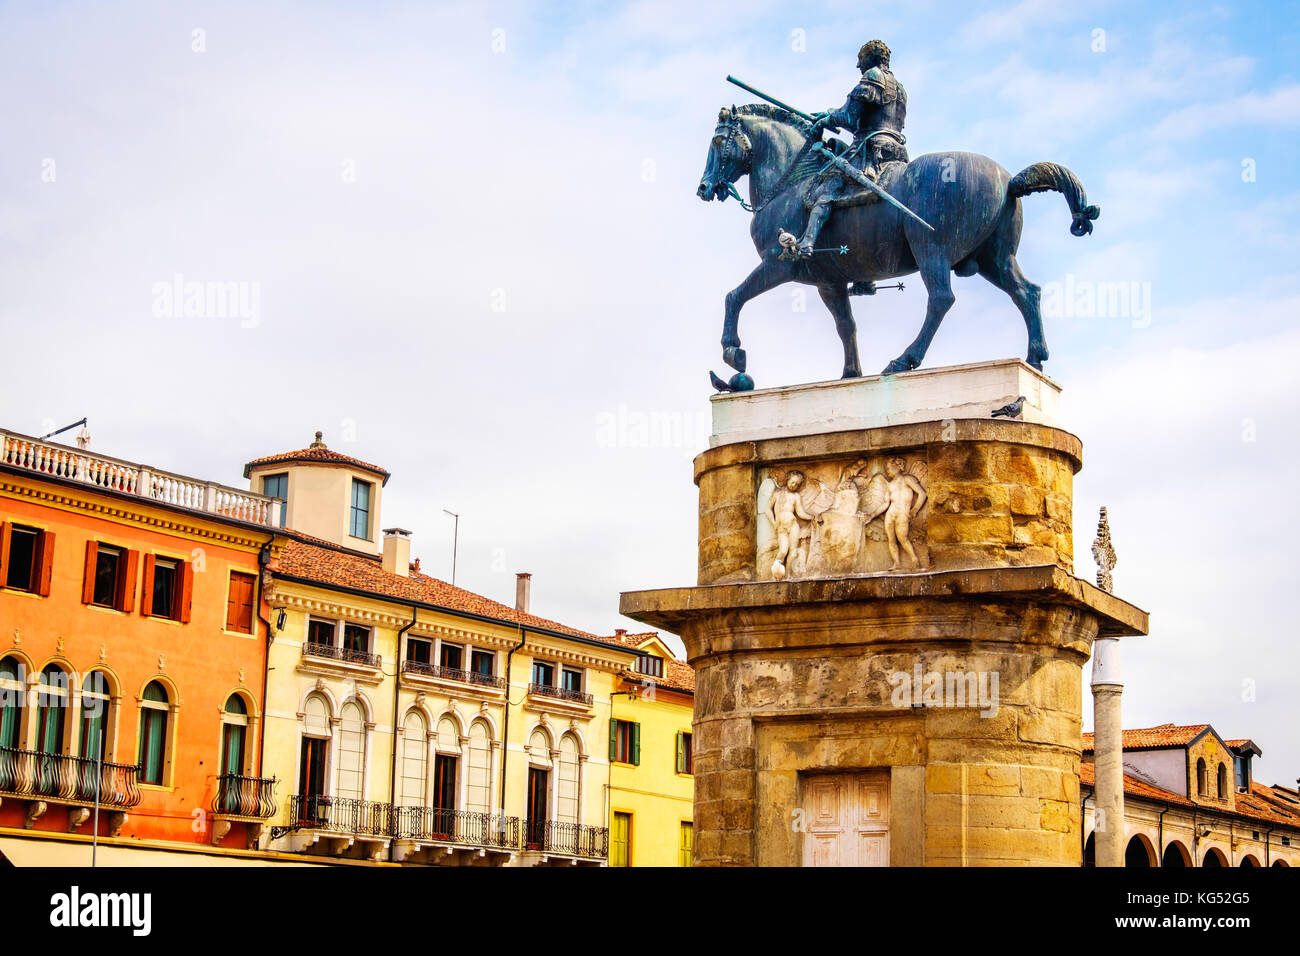 Reiterstandbild des gattamelata in Padua donatello - Italien Stockfoto